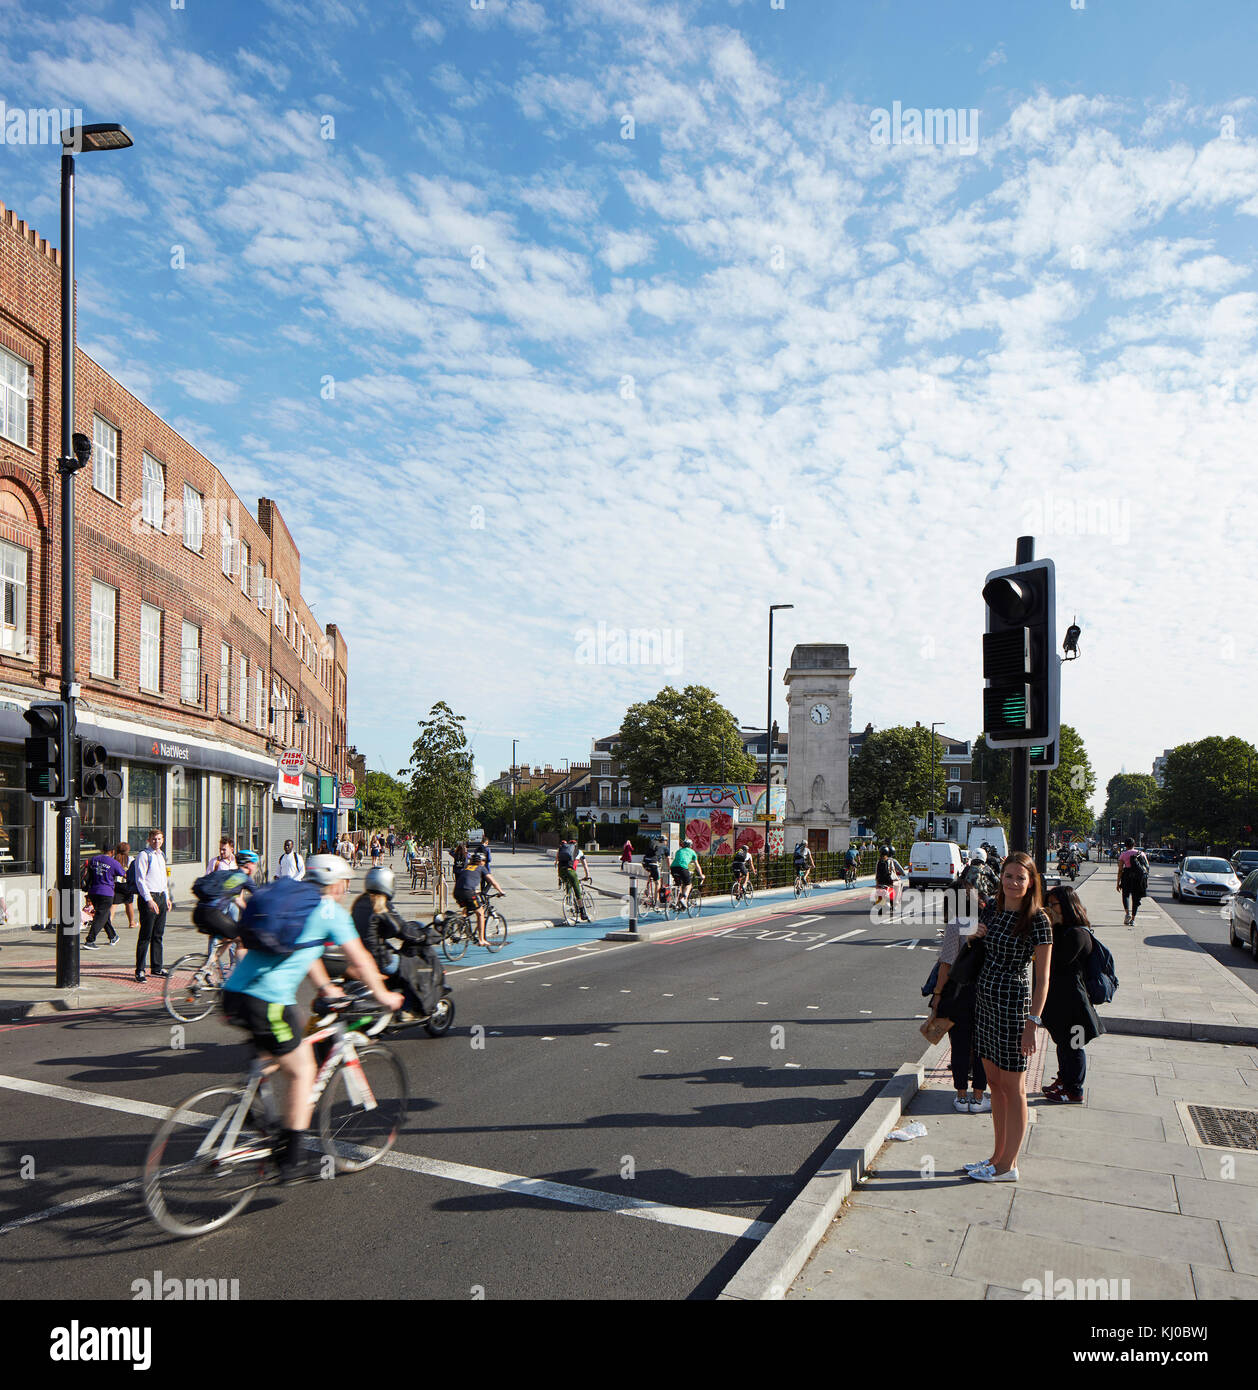 Intersection avec la nouvelle piste cyclable et matin le trafic. Stockwell Framework Masterplan, Londres, Royaume-Uni. Architecte : DSDHA, 2017. Banque D'Images